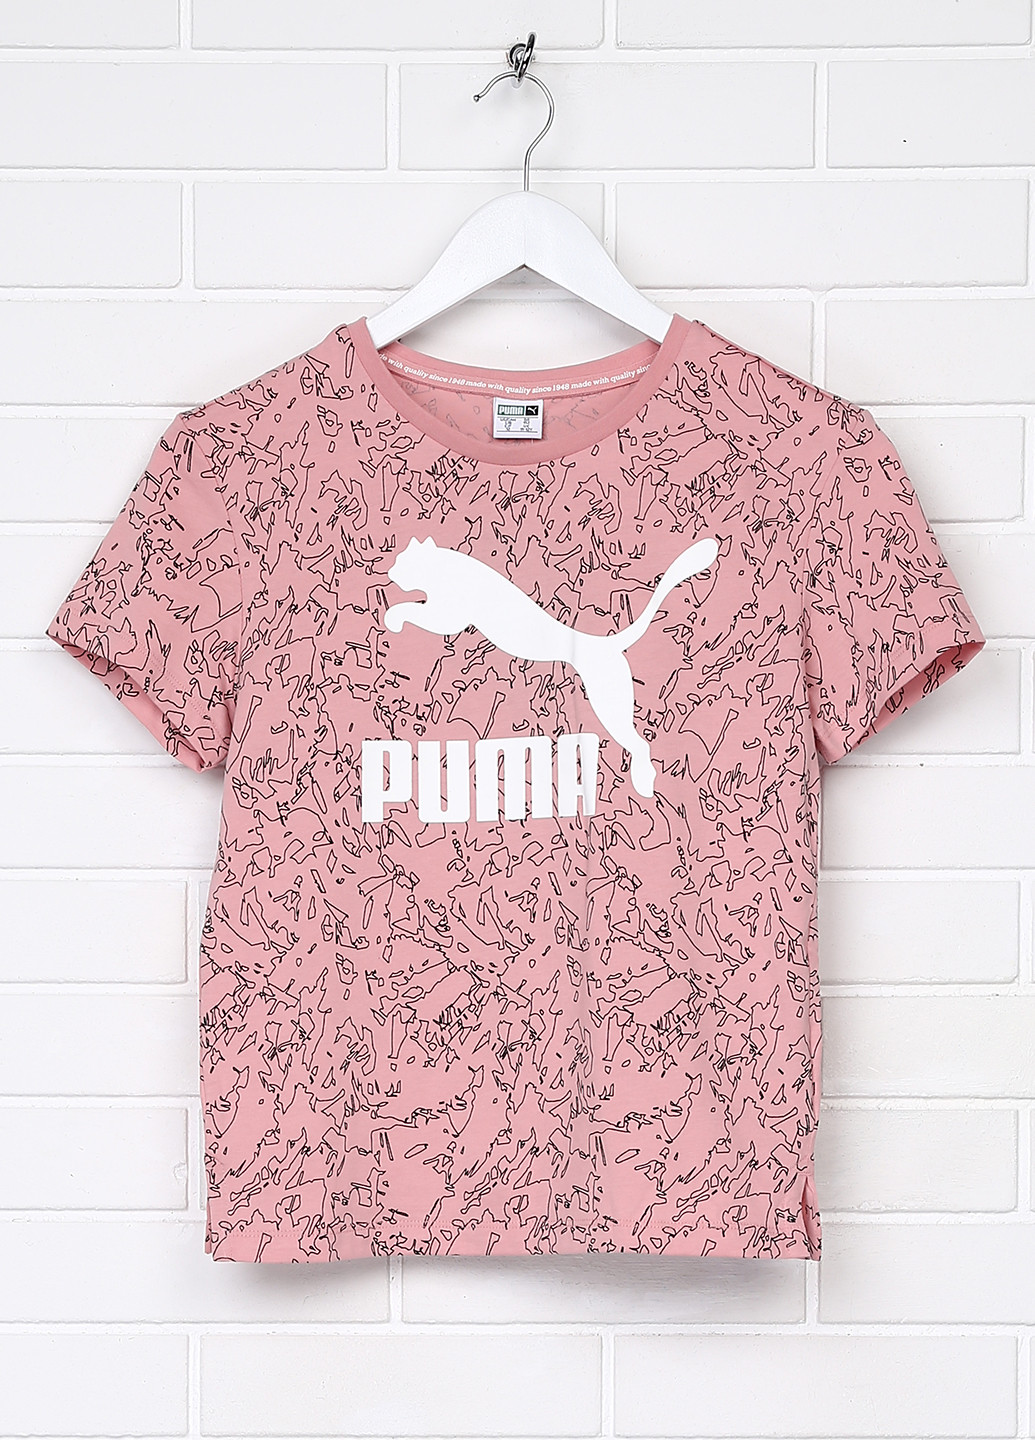 Темно-розовая демисезонная футболка Puma